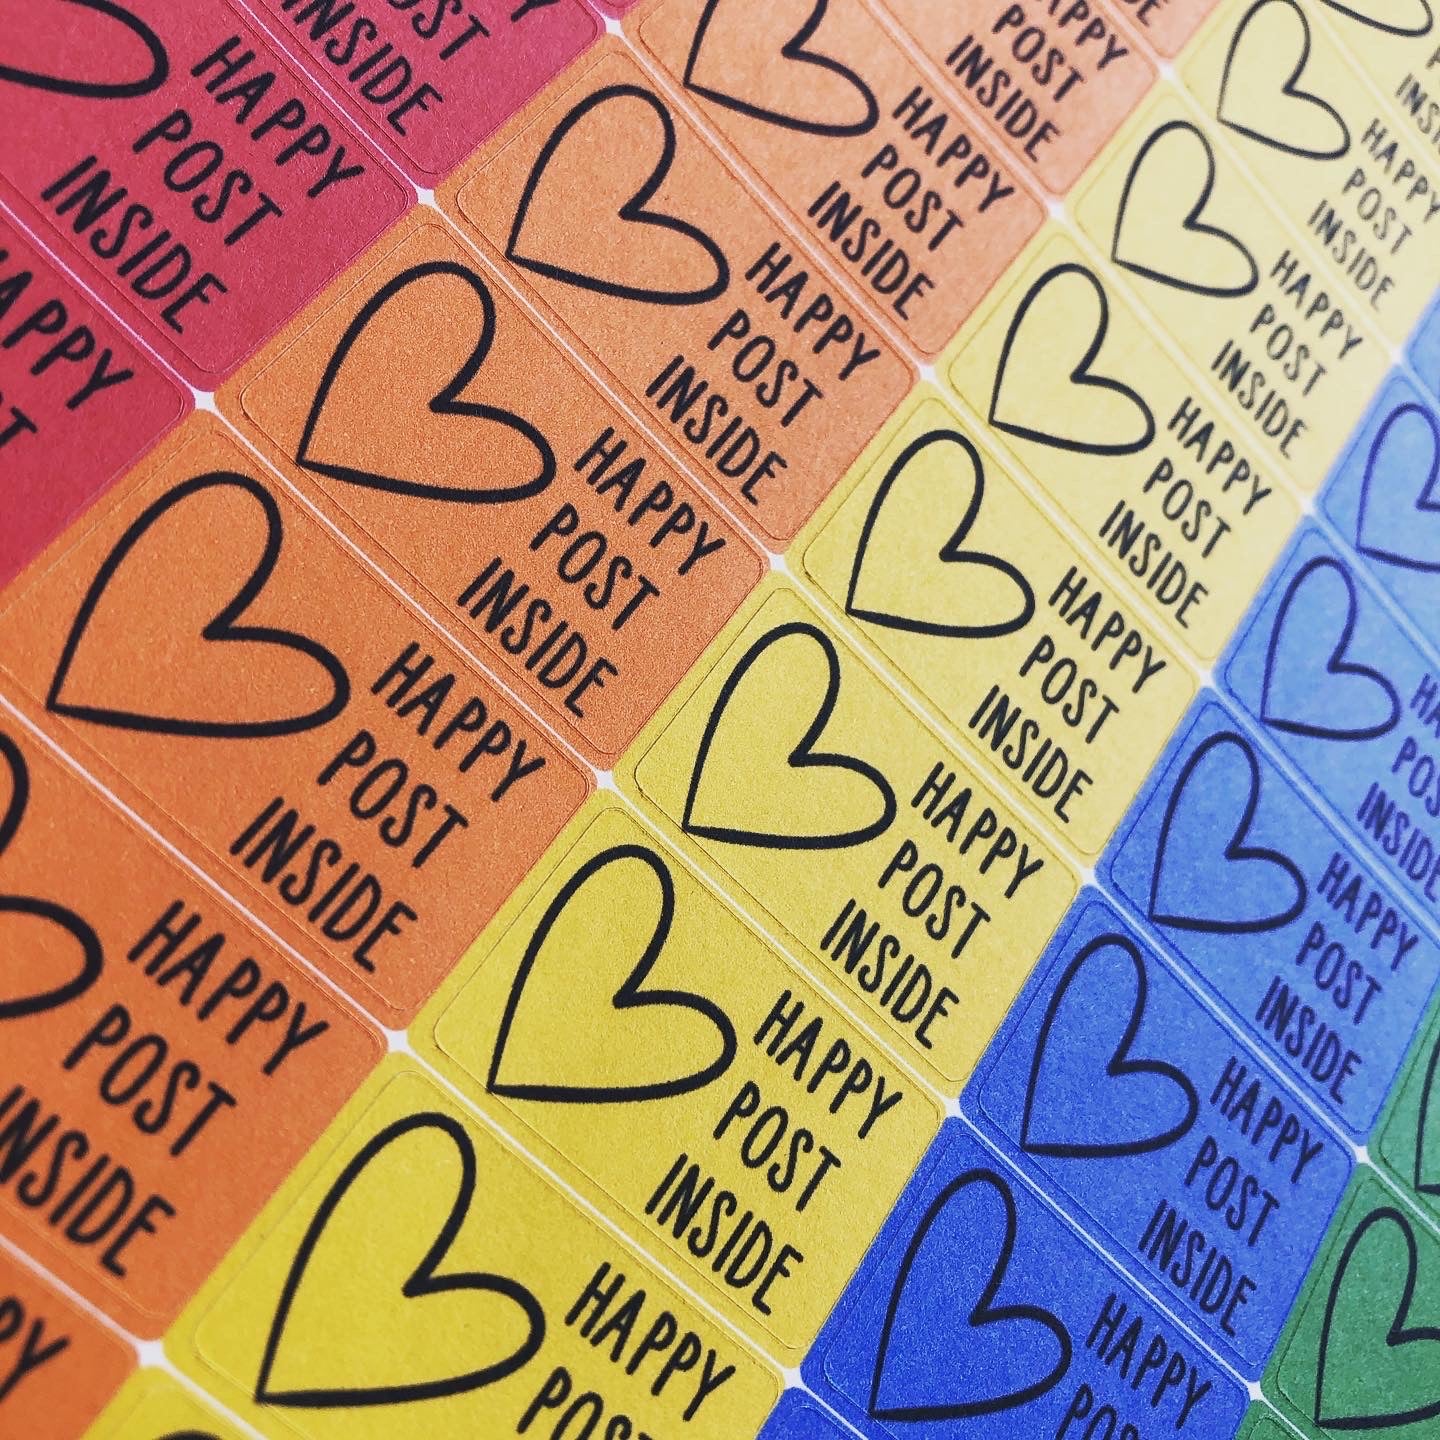 Rainbow happy post stickers - 55 per sheet